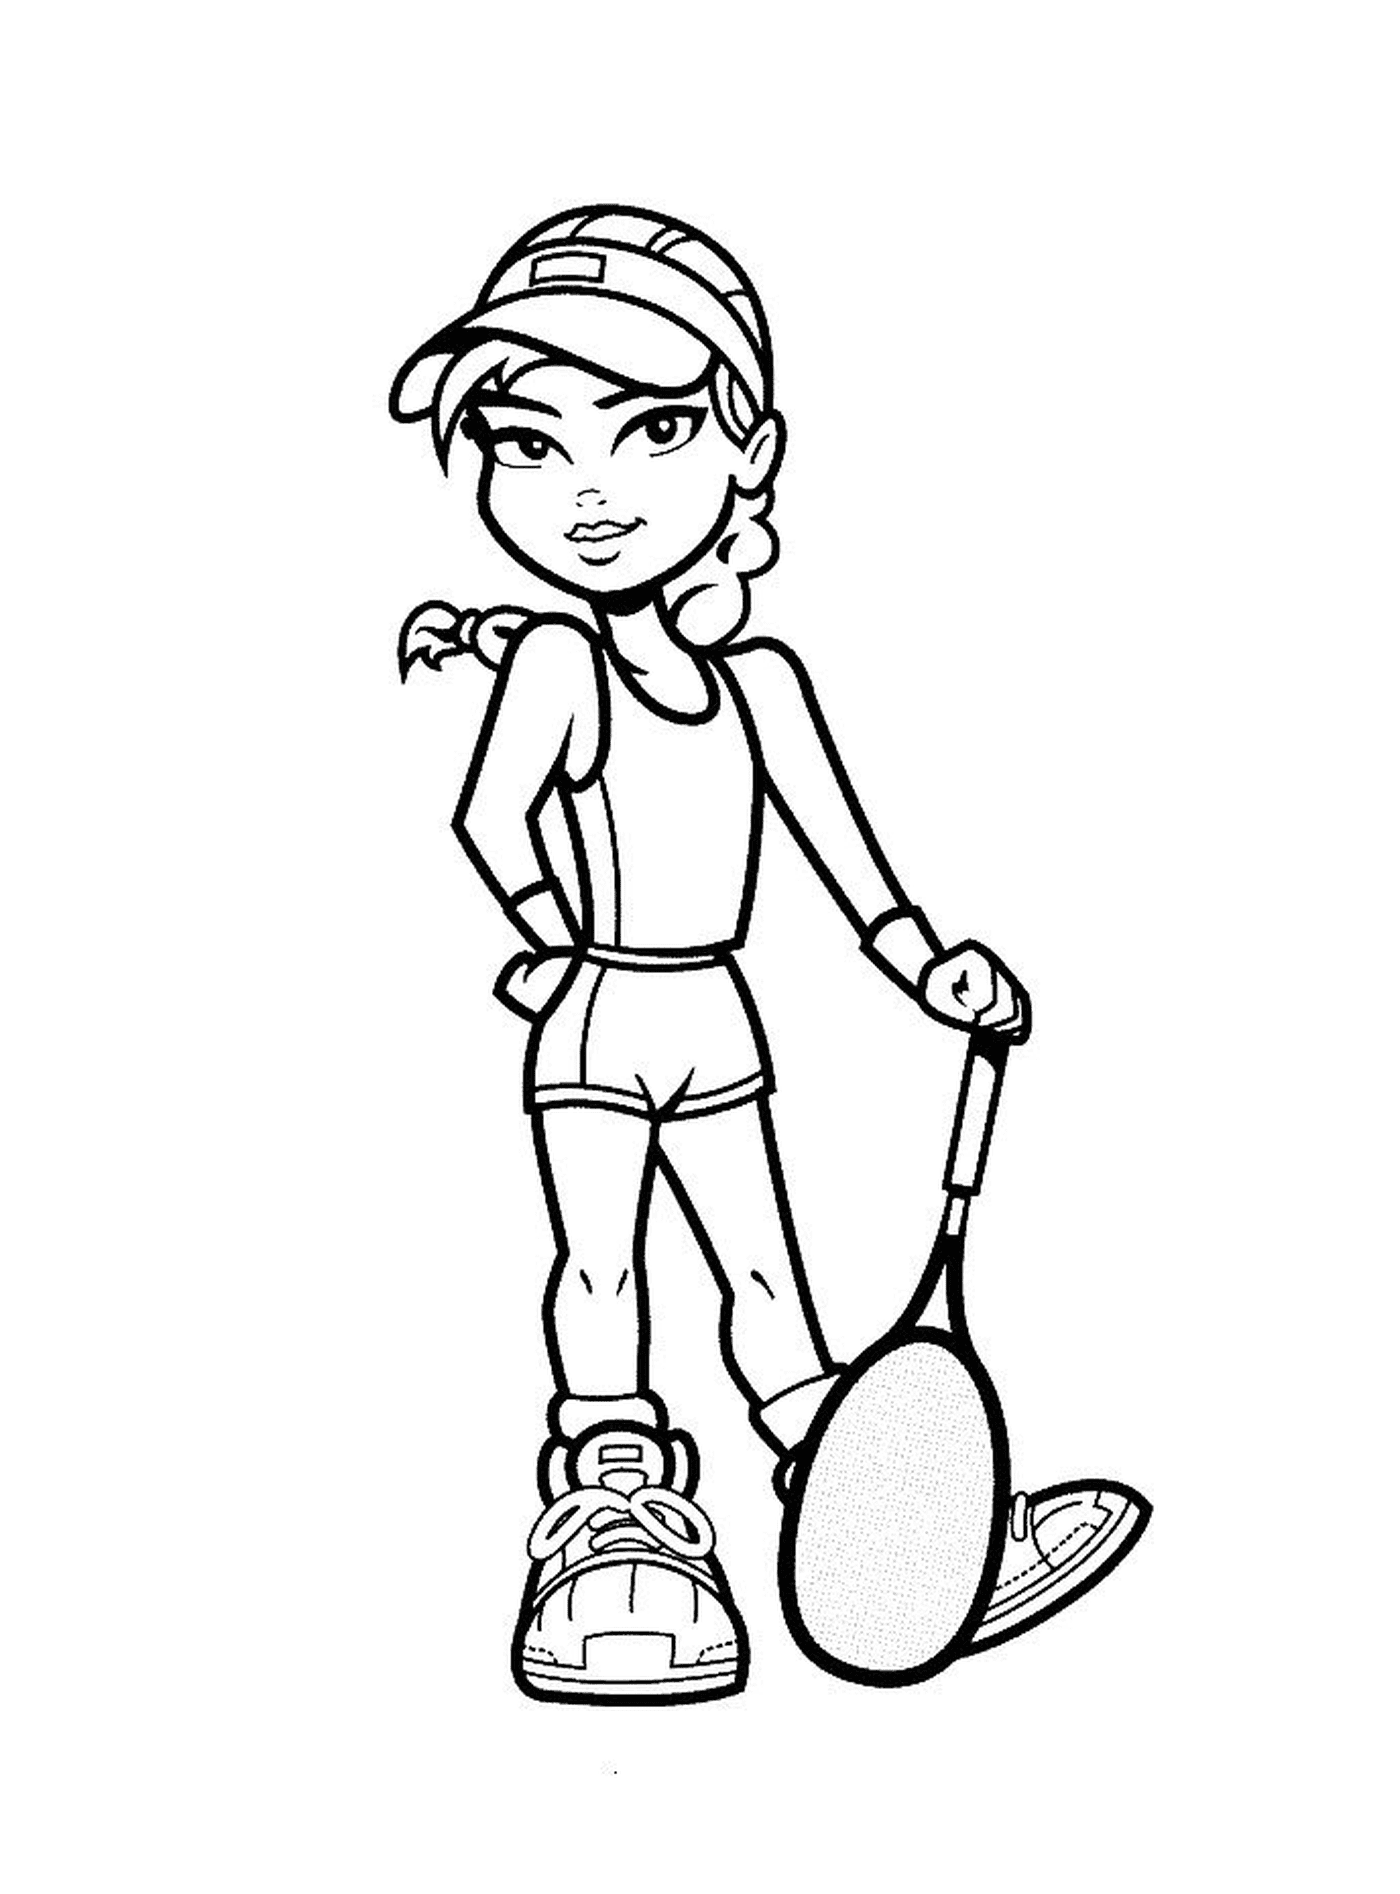  A girl plays tennis 